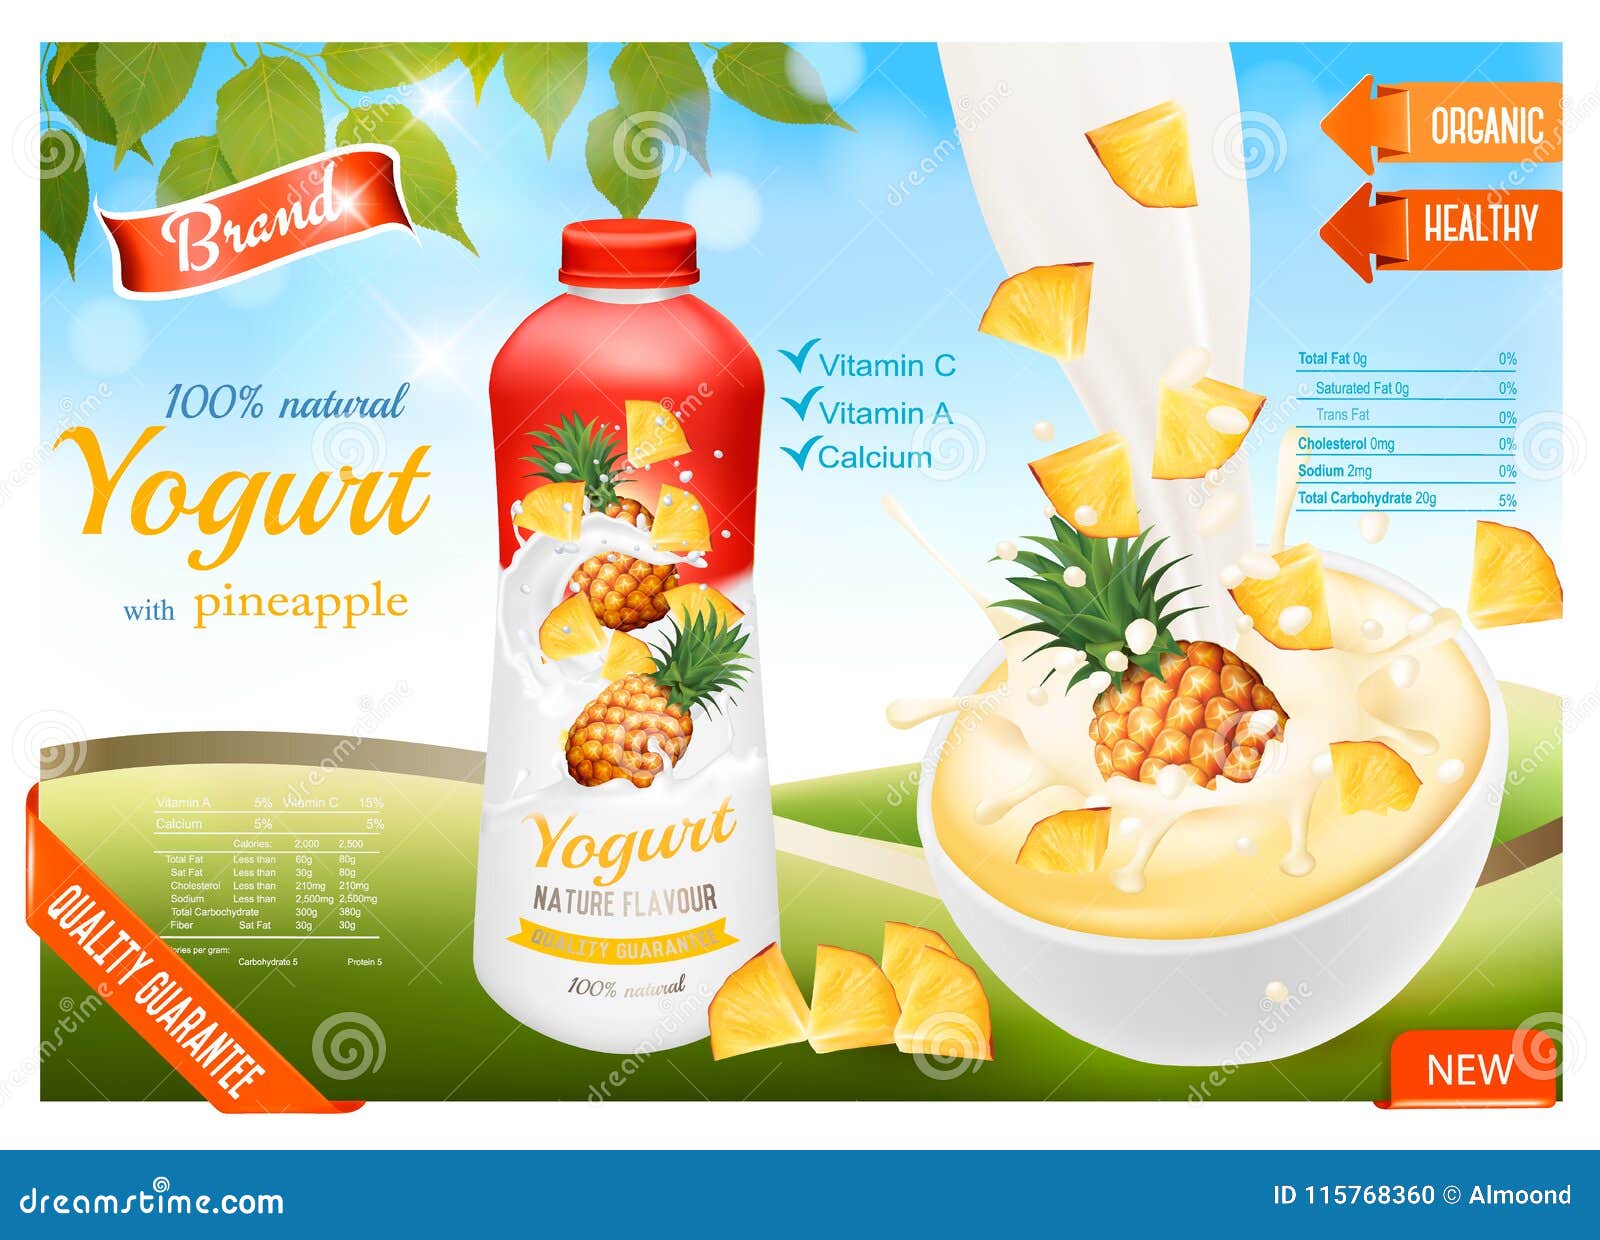 yogurt with fruit advert concept.